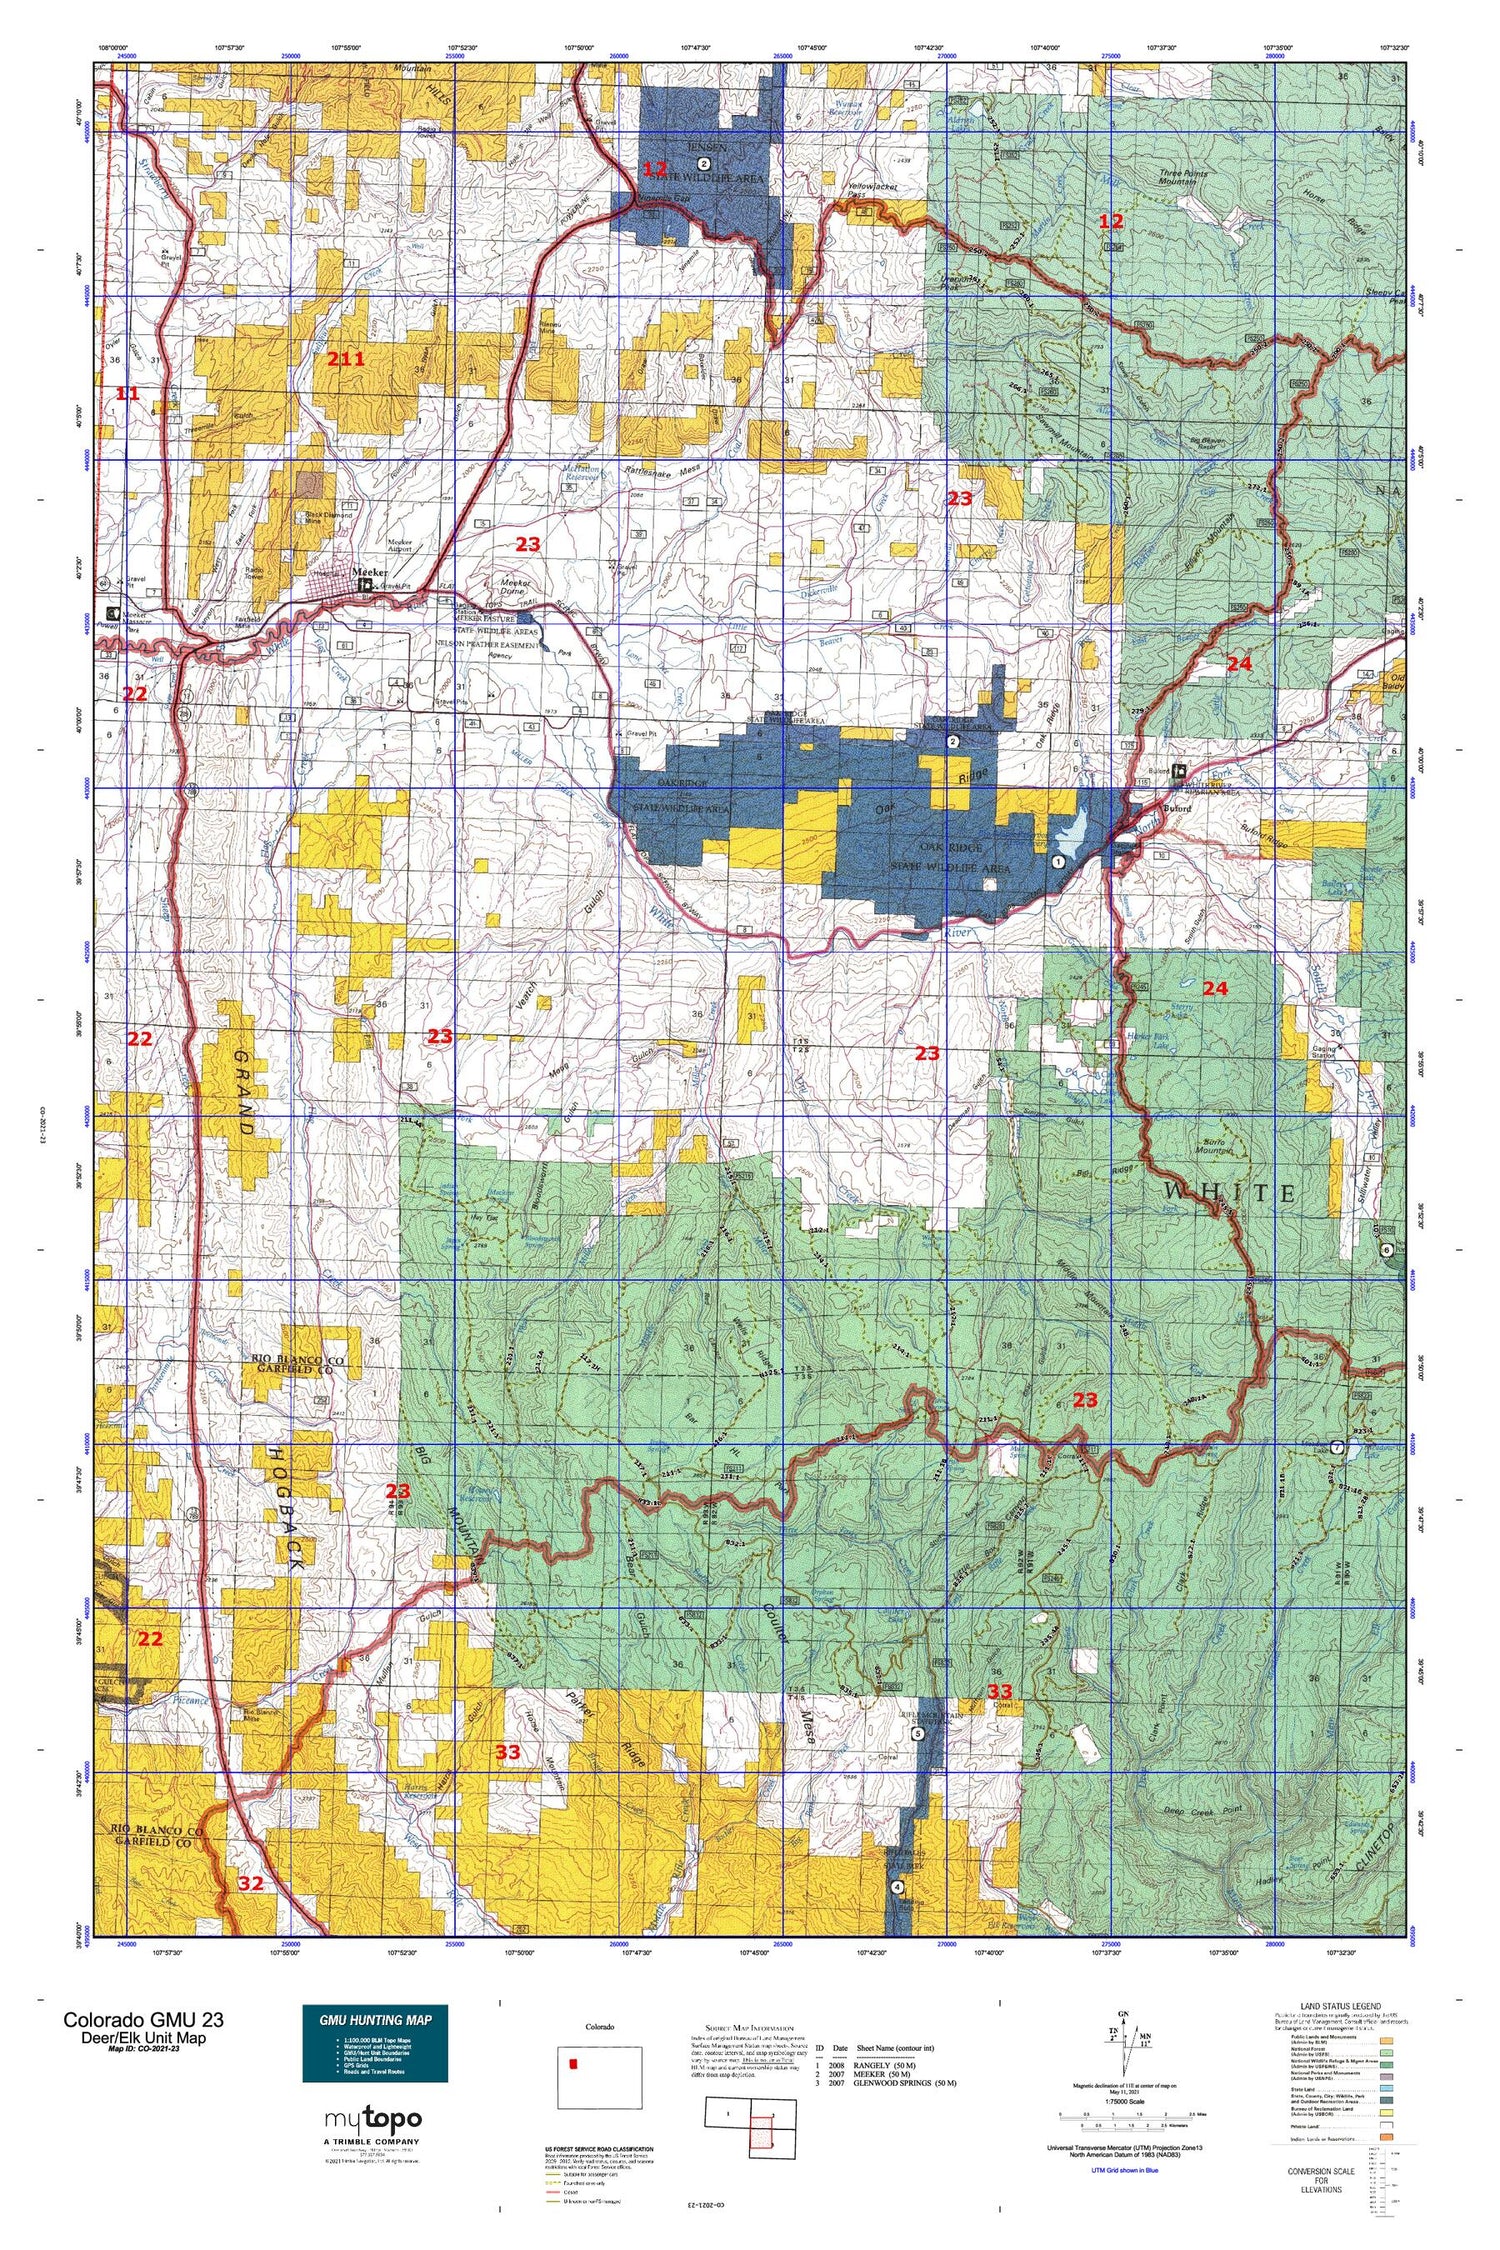 Colorado GMU 23 Map Image